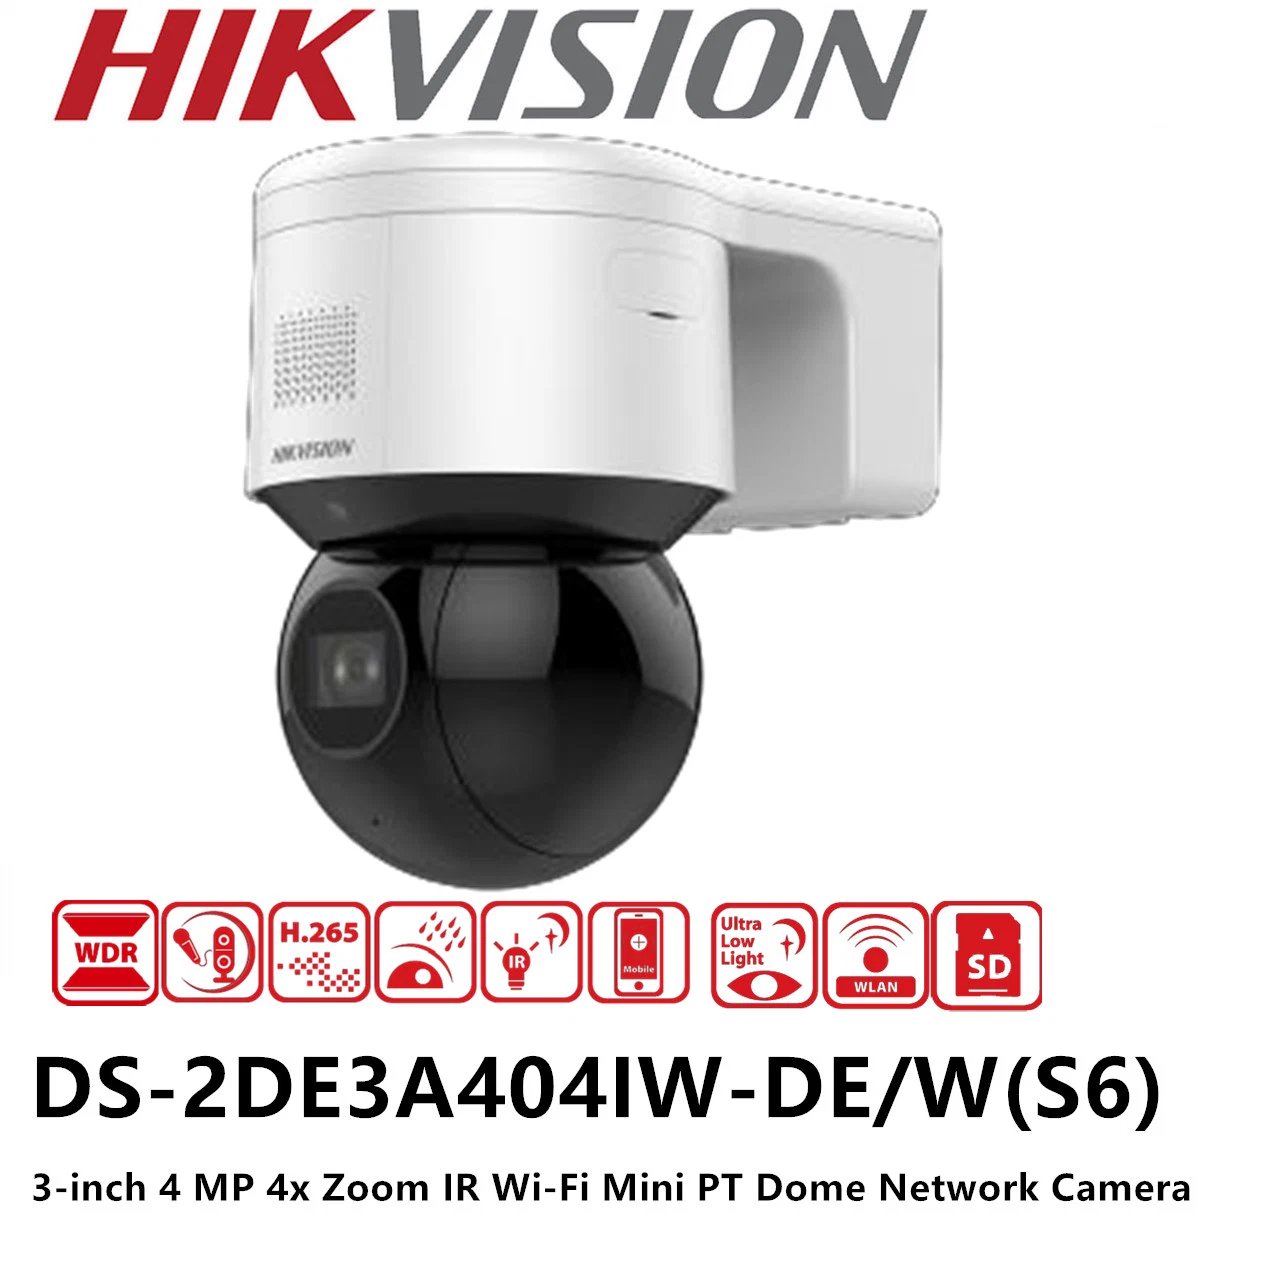 Hikvision OEM 3-Inch 4 MP 4X Zoom IR Wi-Fi Mini PT Dome Network Camera Ds-2de3A404iw-De/W (S6)